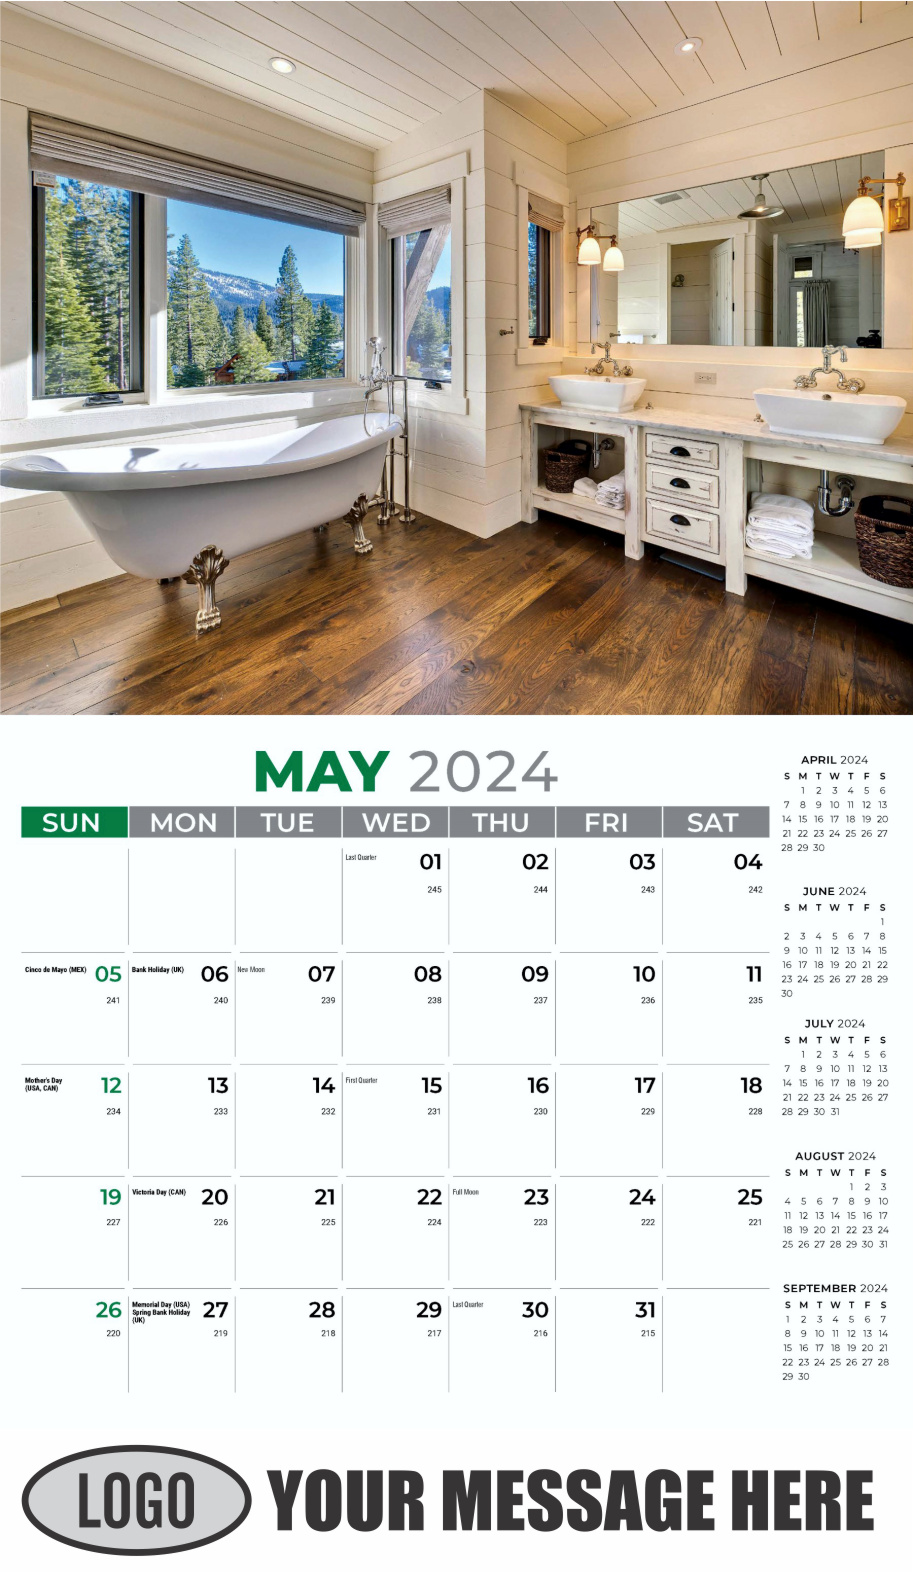 Decor and Design 2024 Interior Design Business Promotional Calendar - May